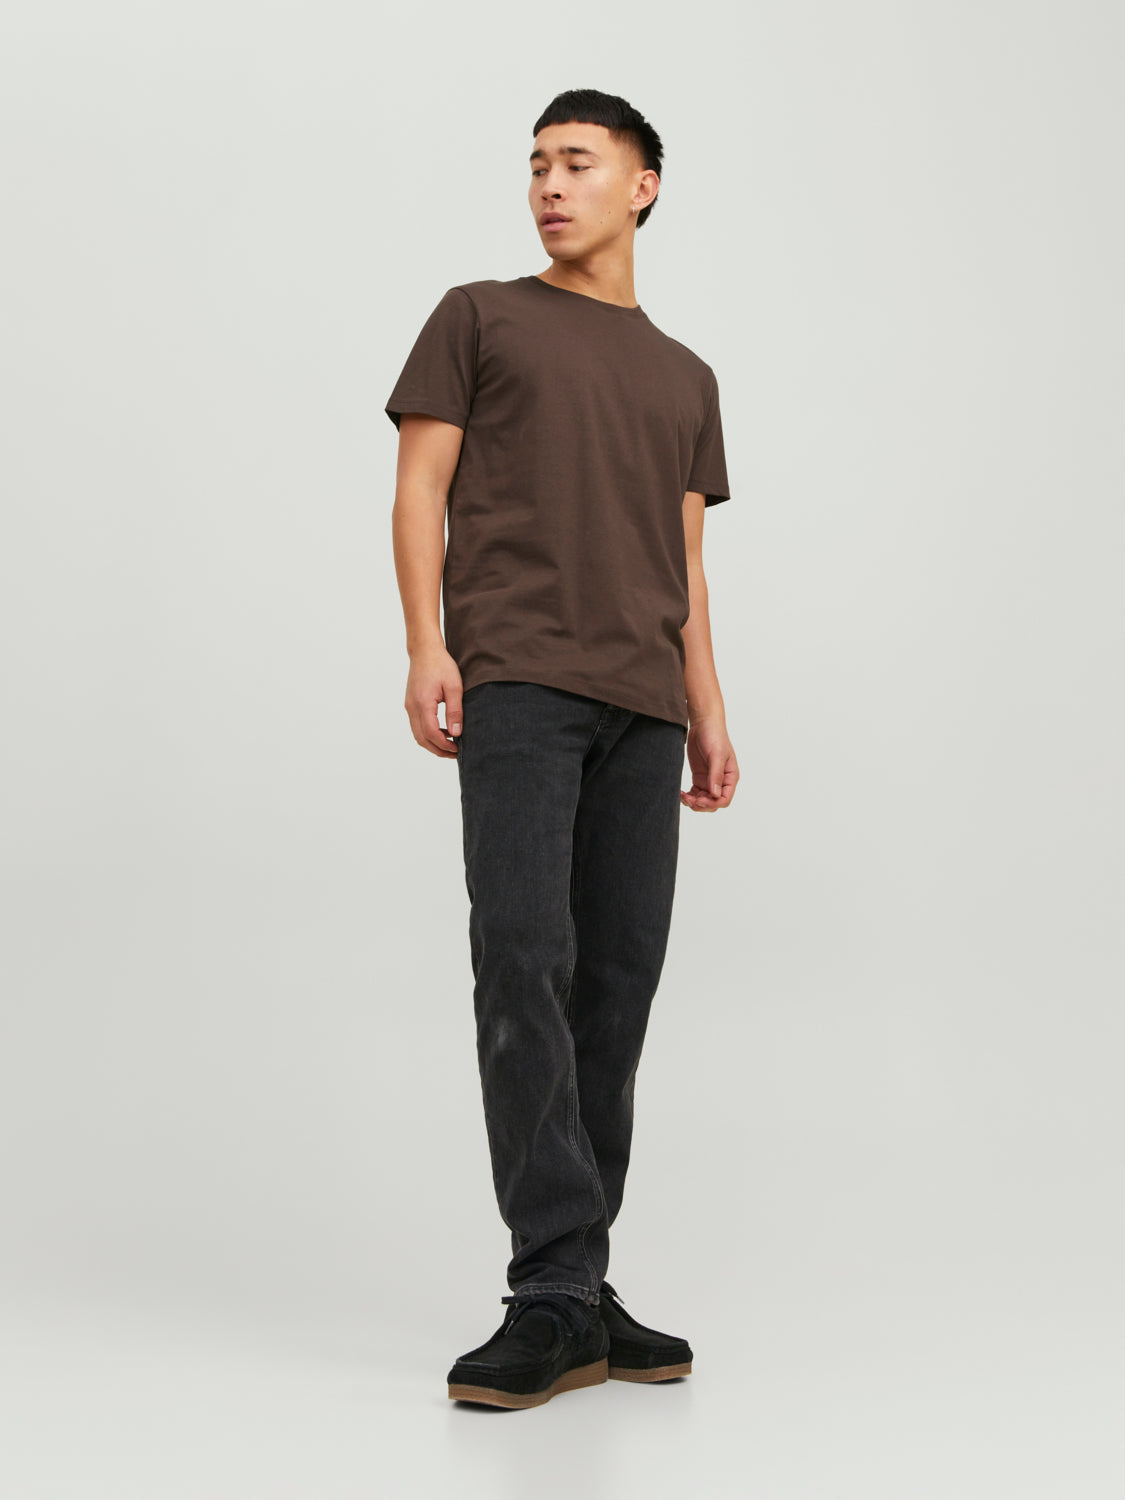 JJEORGANIC T-Shirt - Seal Brown